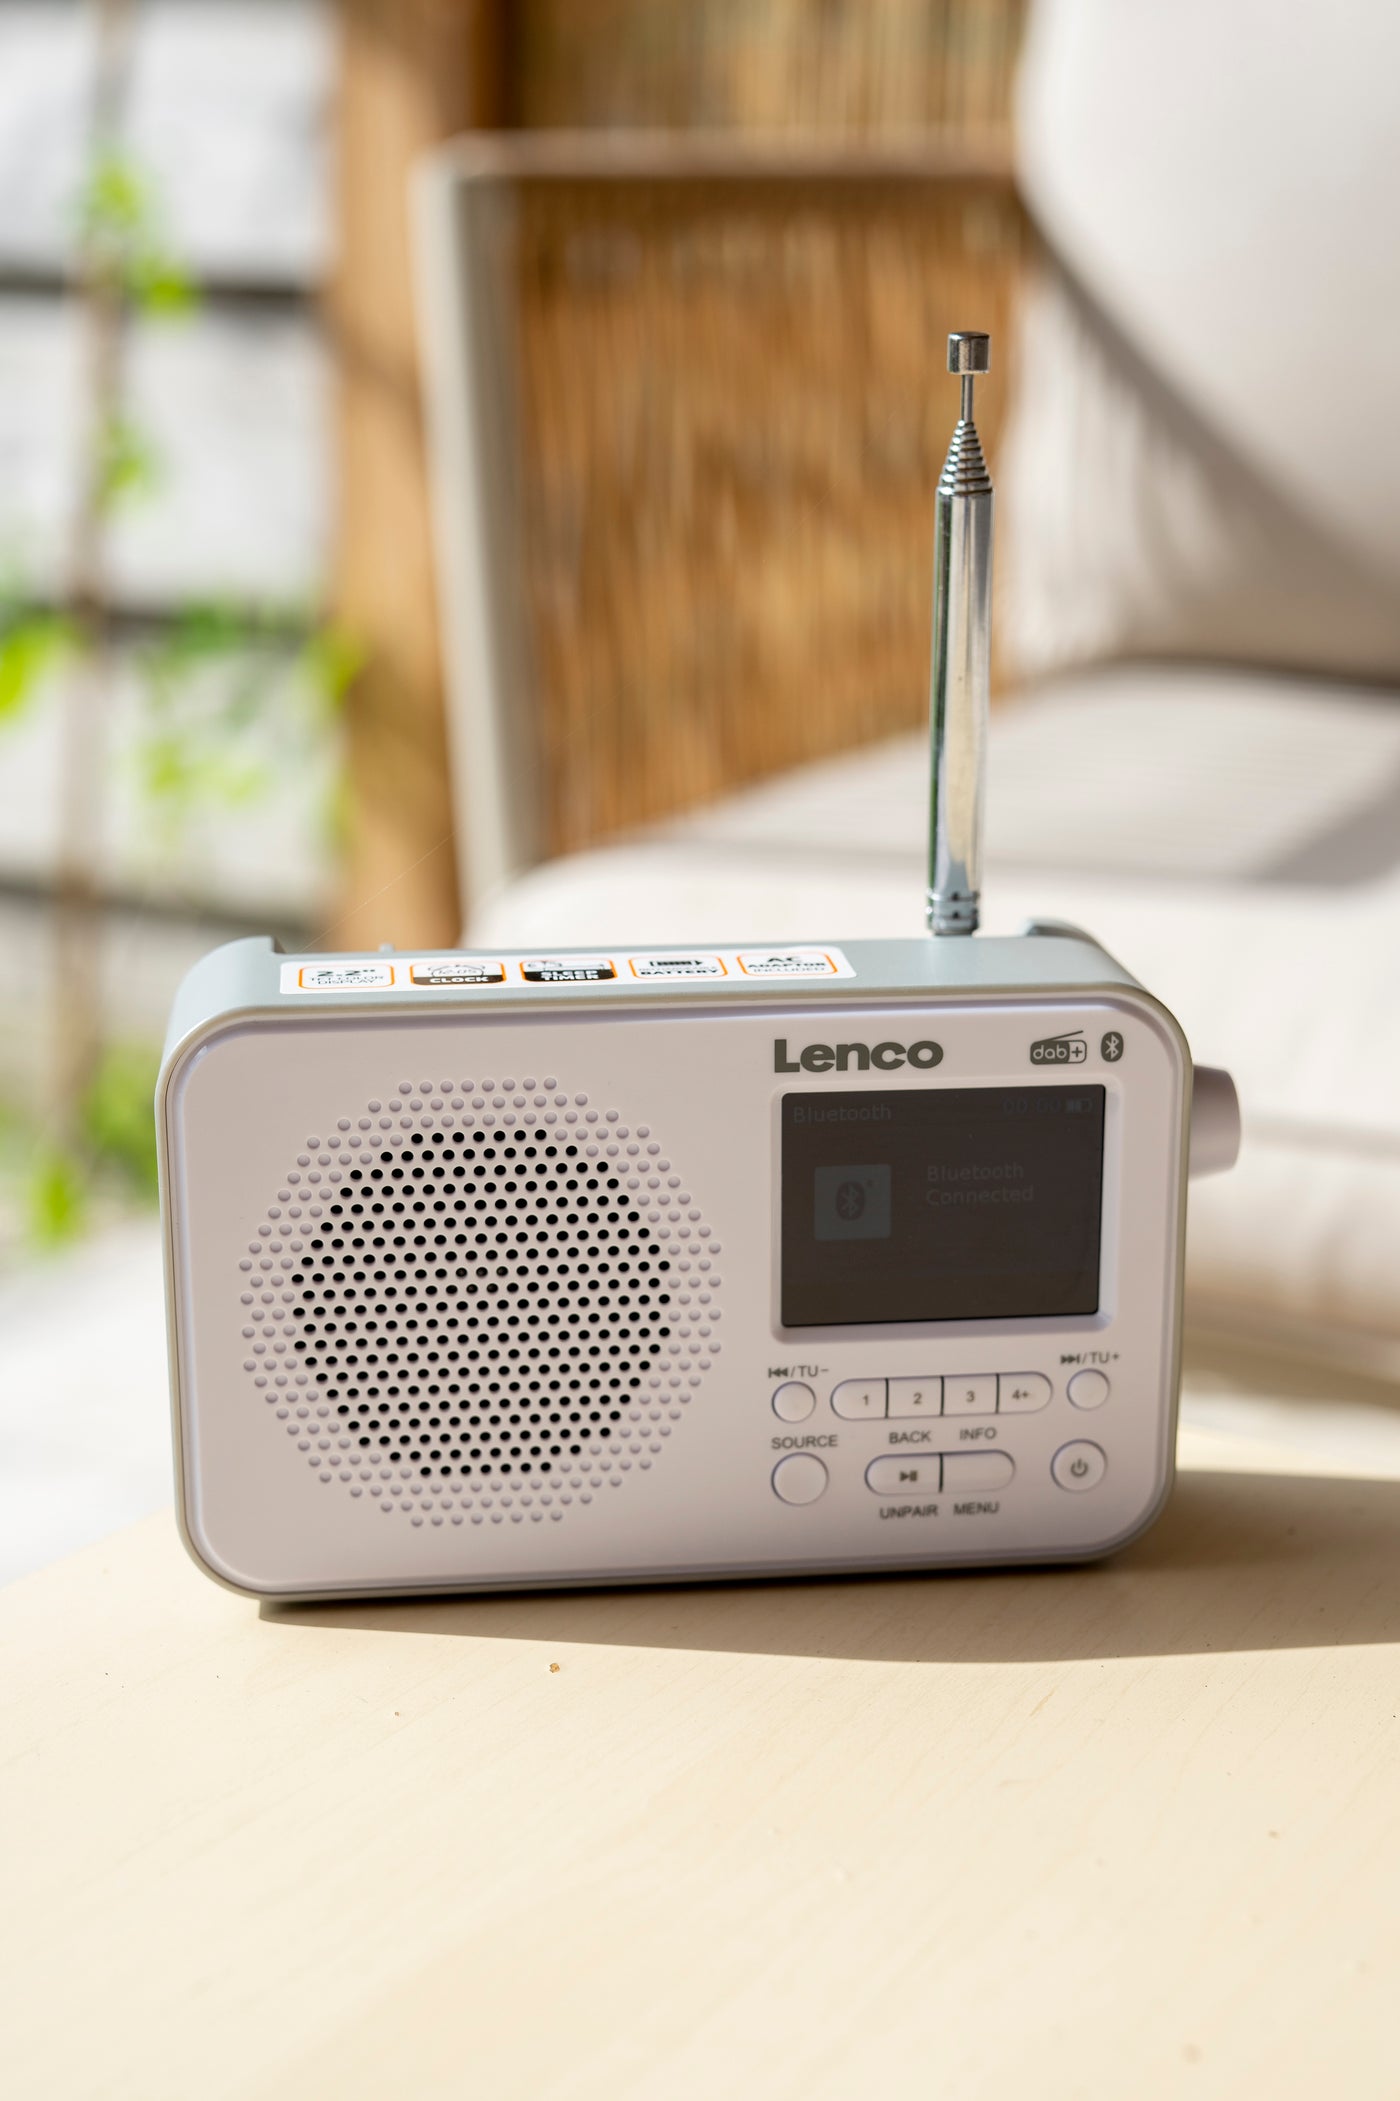 LENCO PDR-035WH - DAB + / FM Radio with Bluetooth® - White